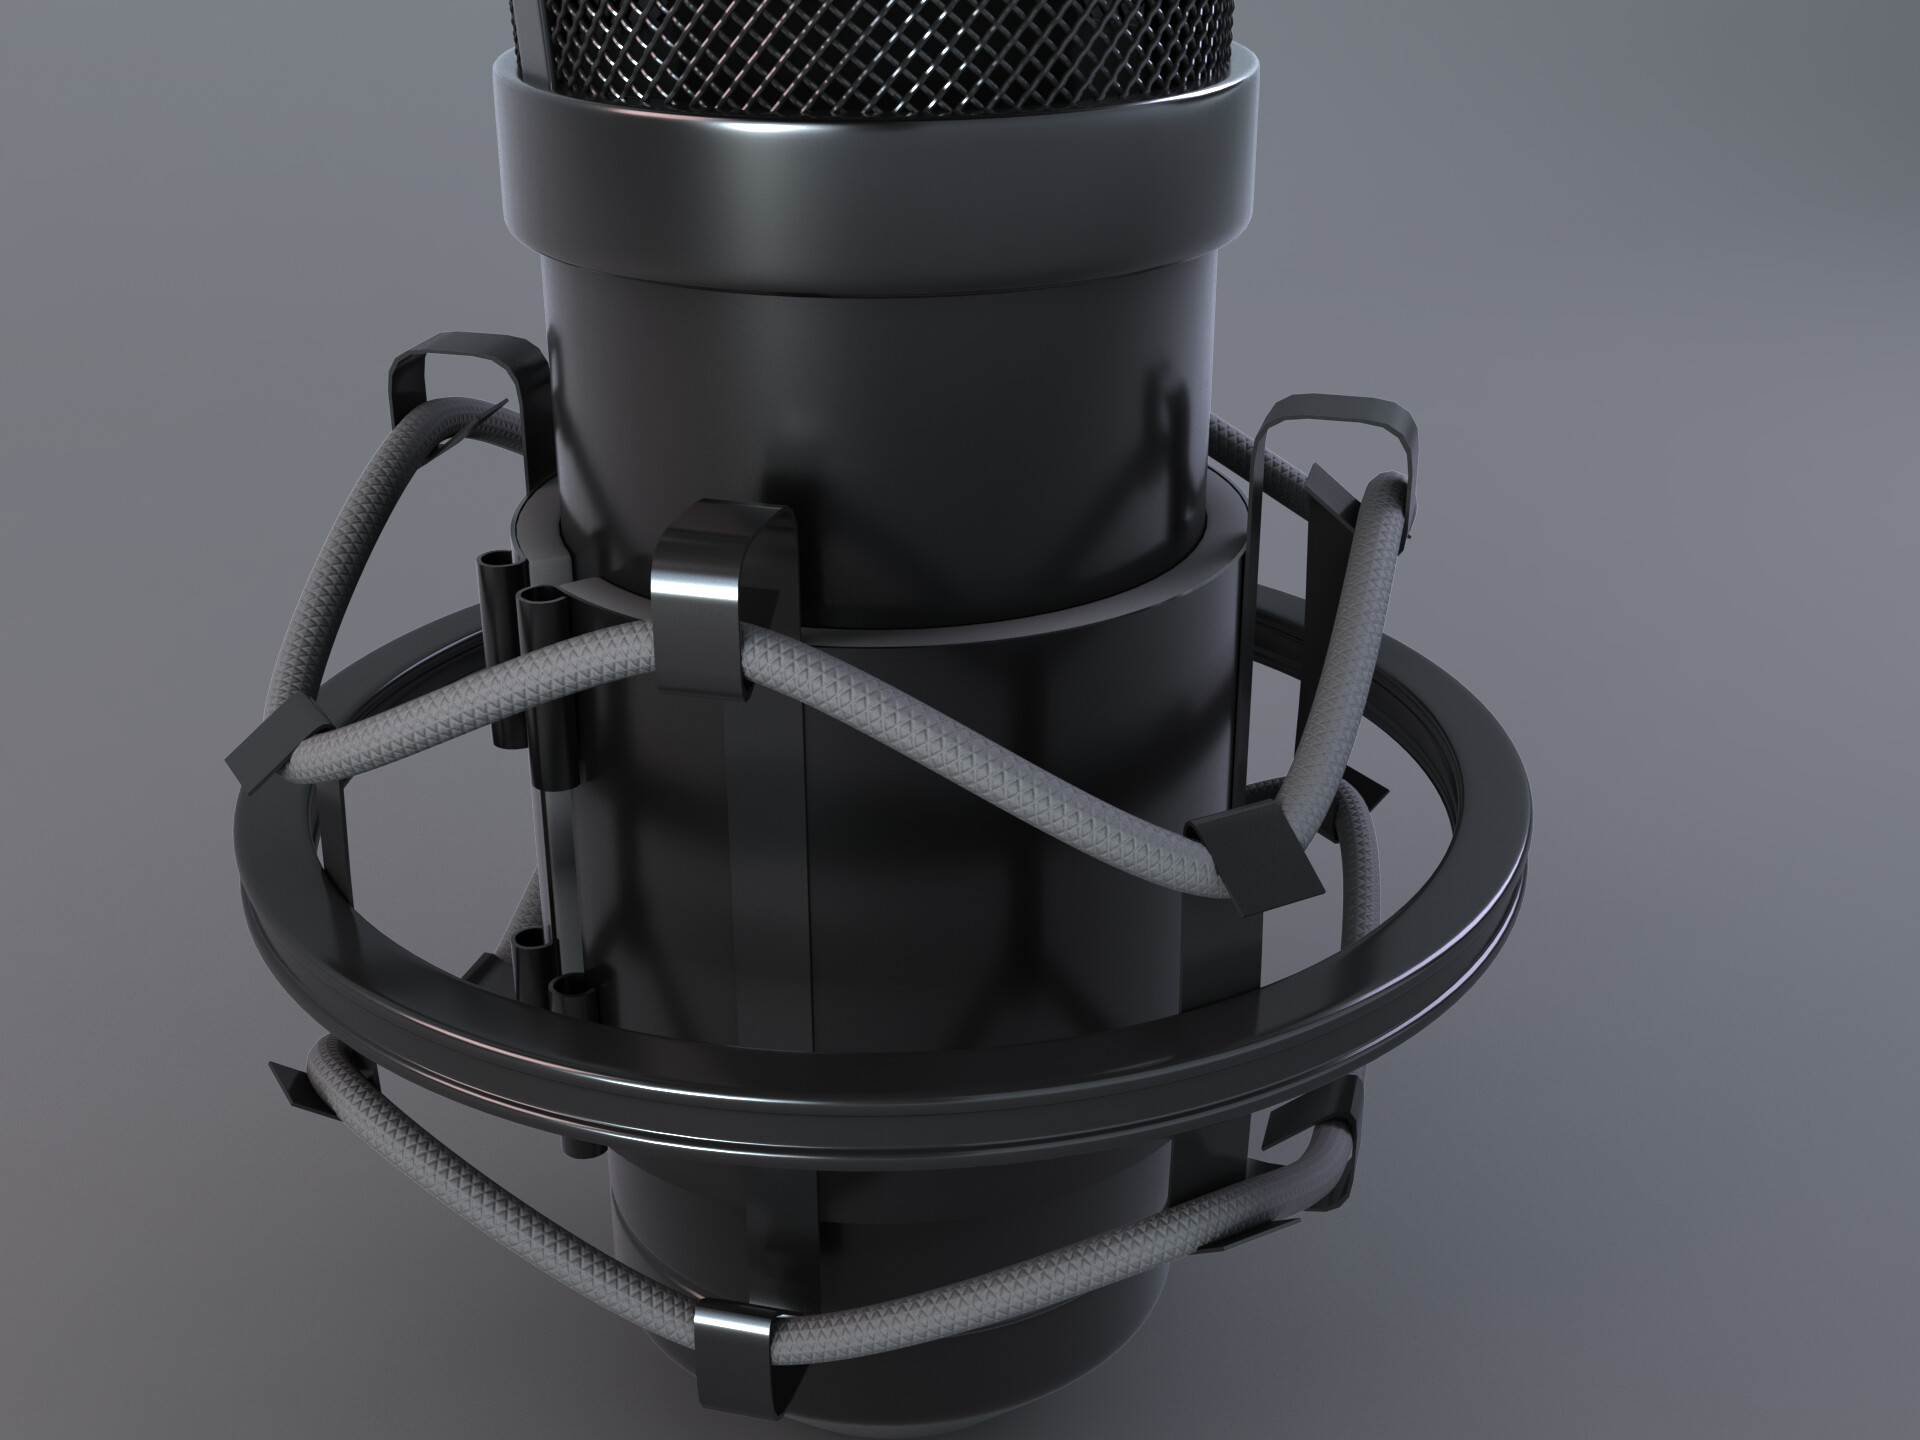 ArtStation - Bird UM1 Microphone